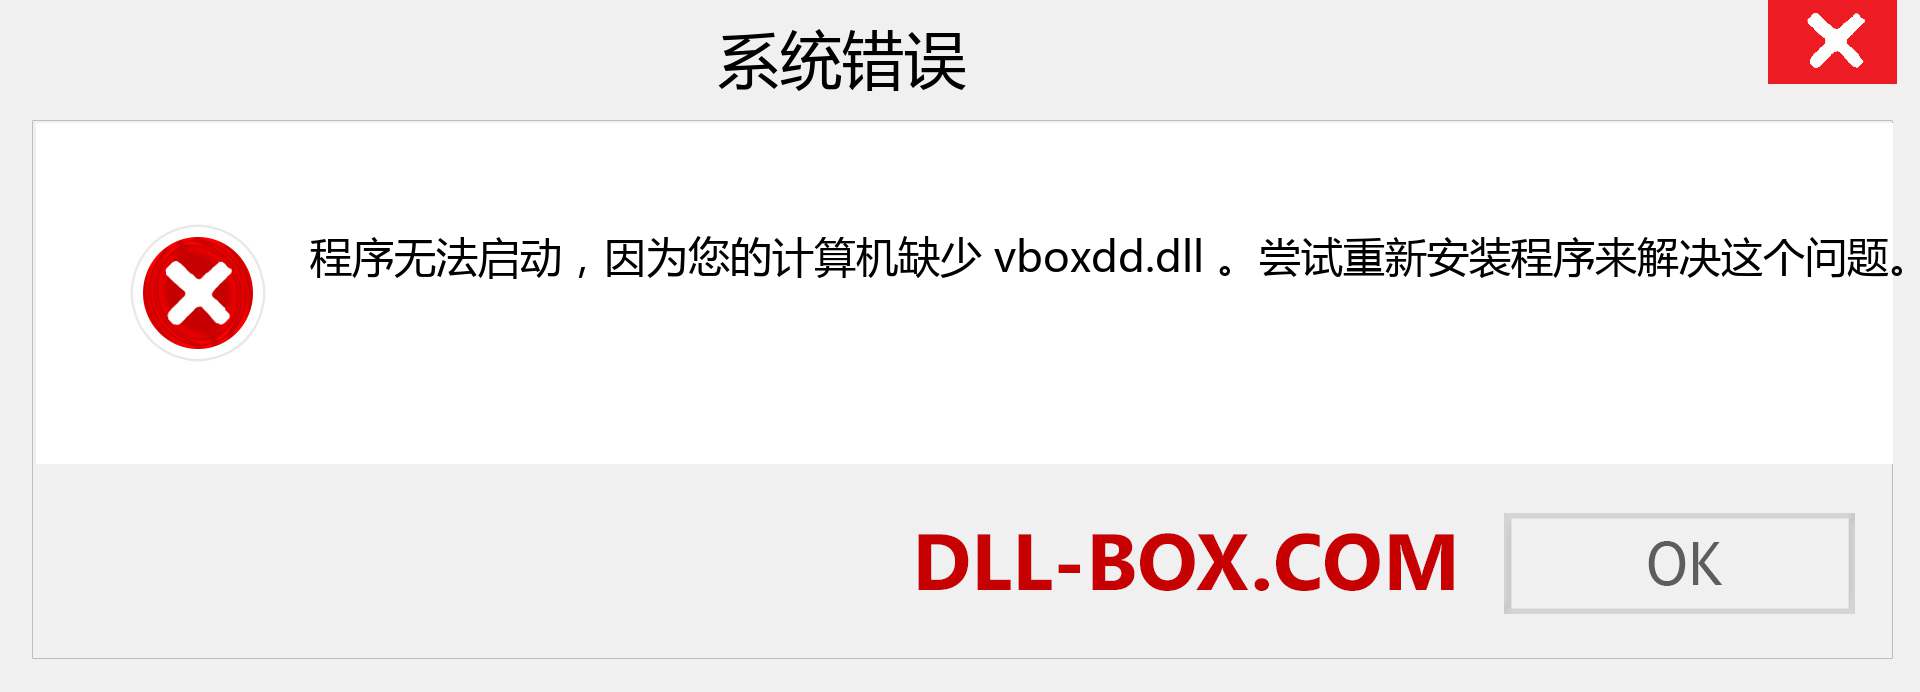 vboxdd.dll 文件丢失？。 适用于 Windows 7、8、10 的下载 - 修复 Windows、照片、图像上的 vboxdd dll 丢失错误